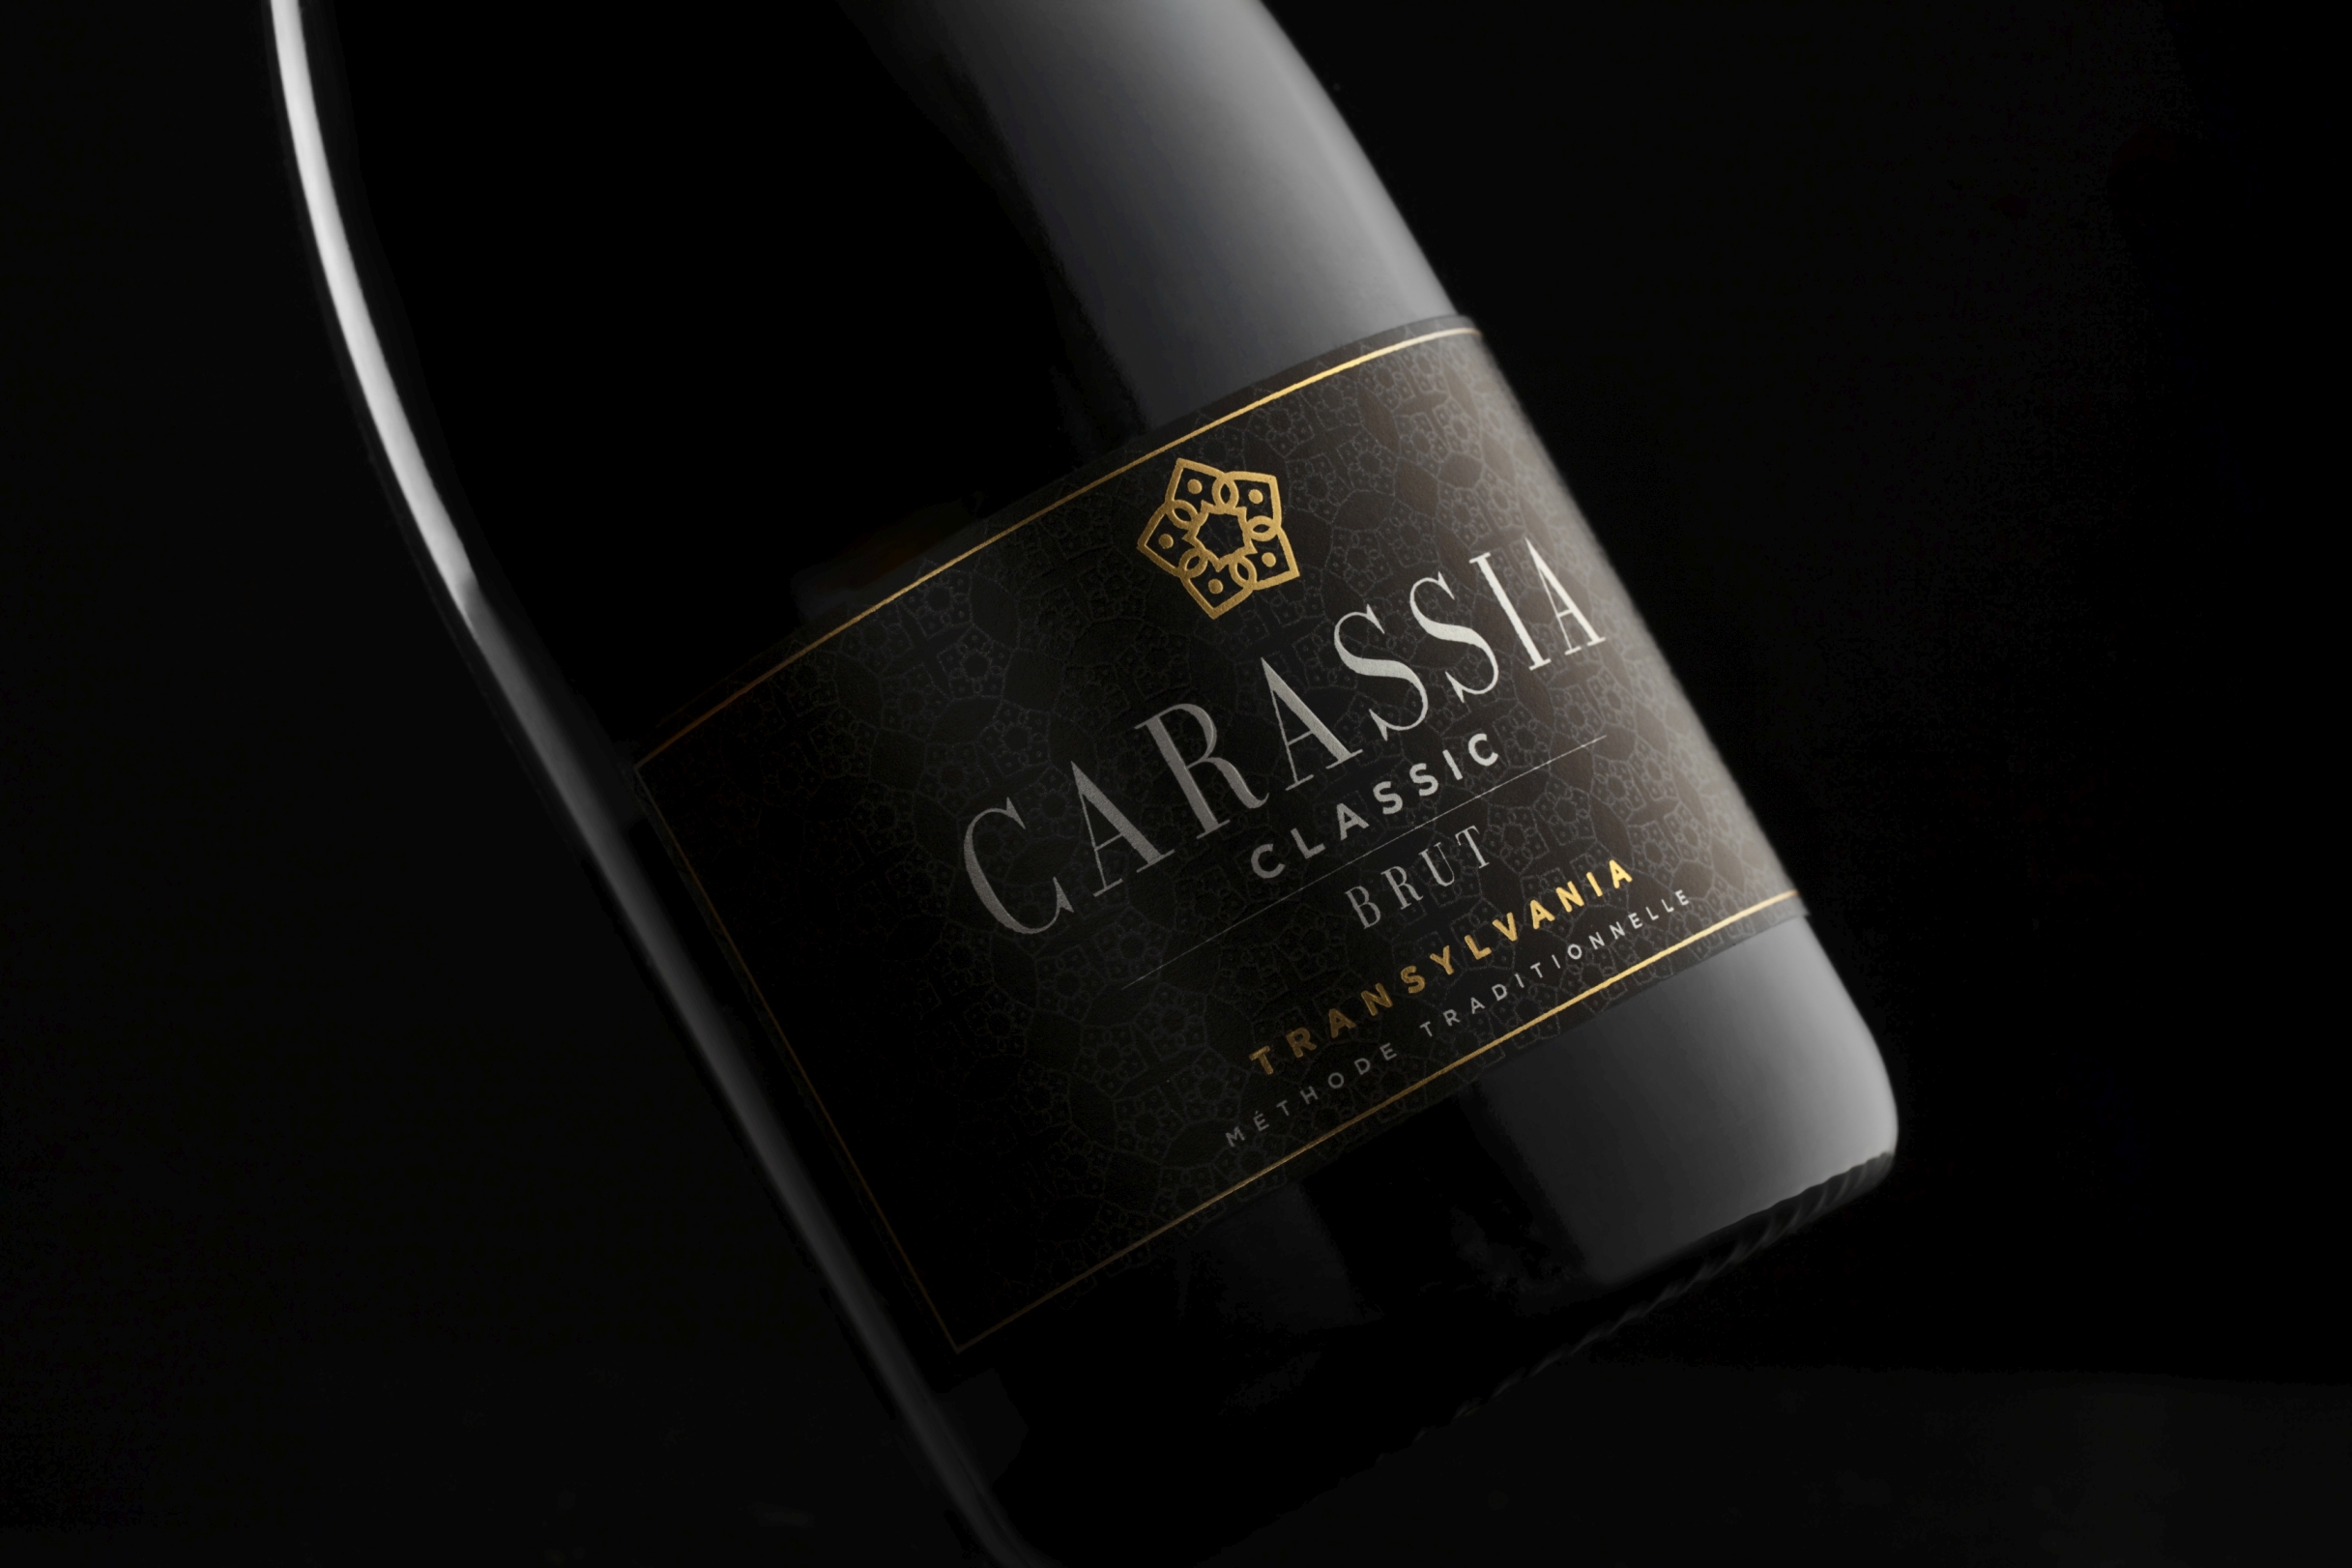 Carassia Methode Traditionnelle Carastelec Winery Romania